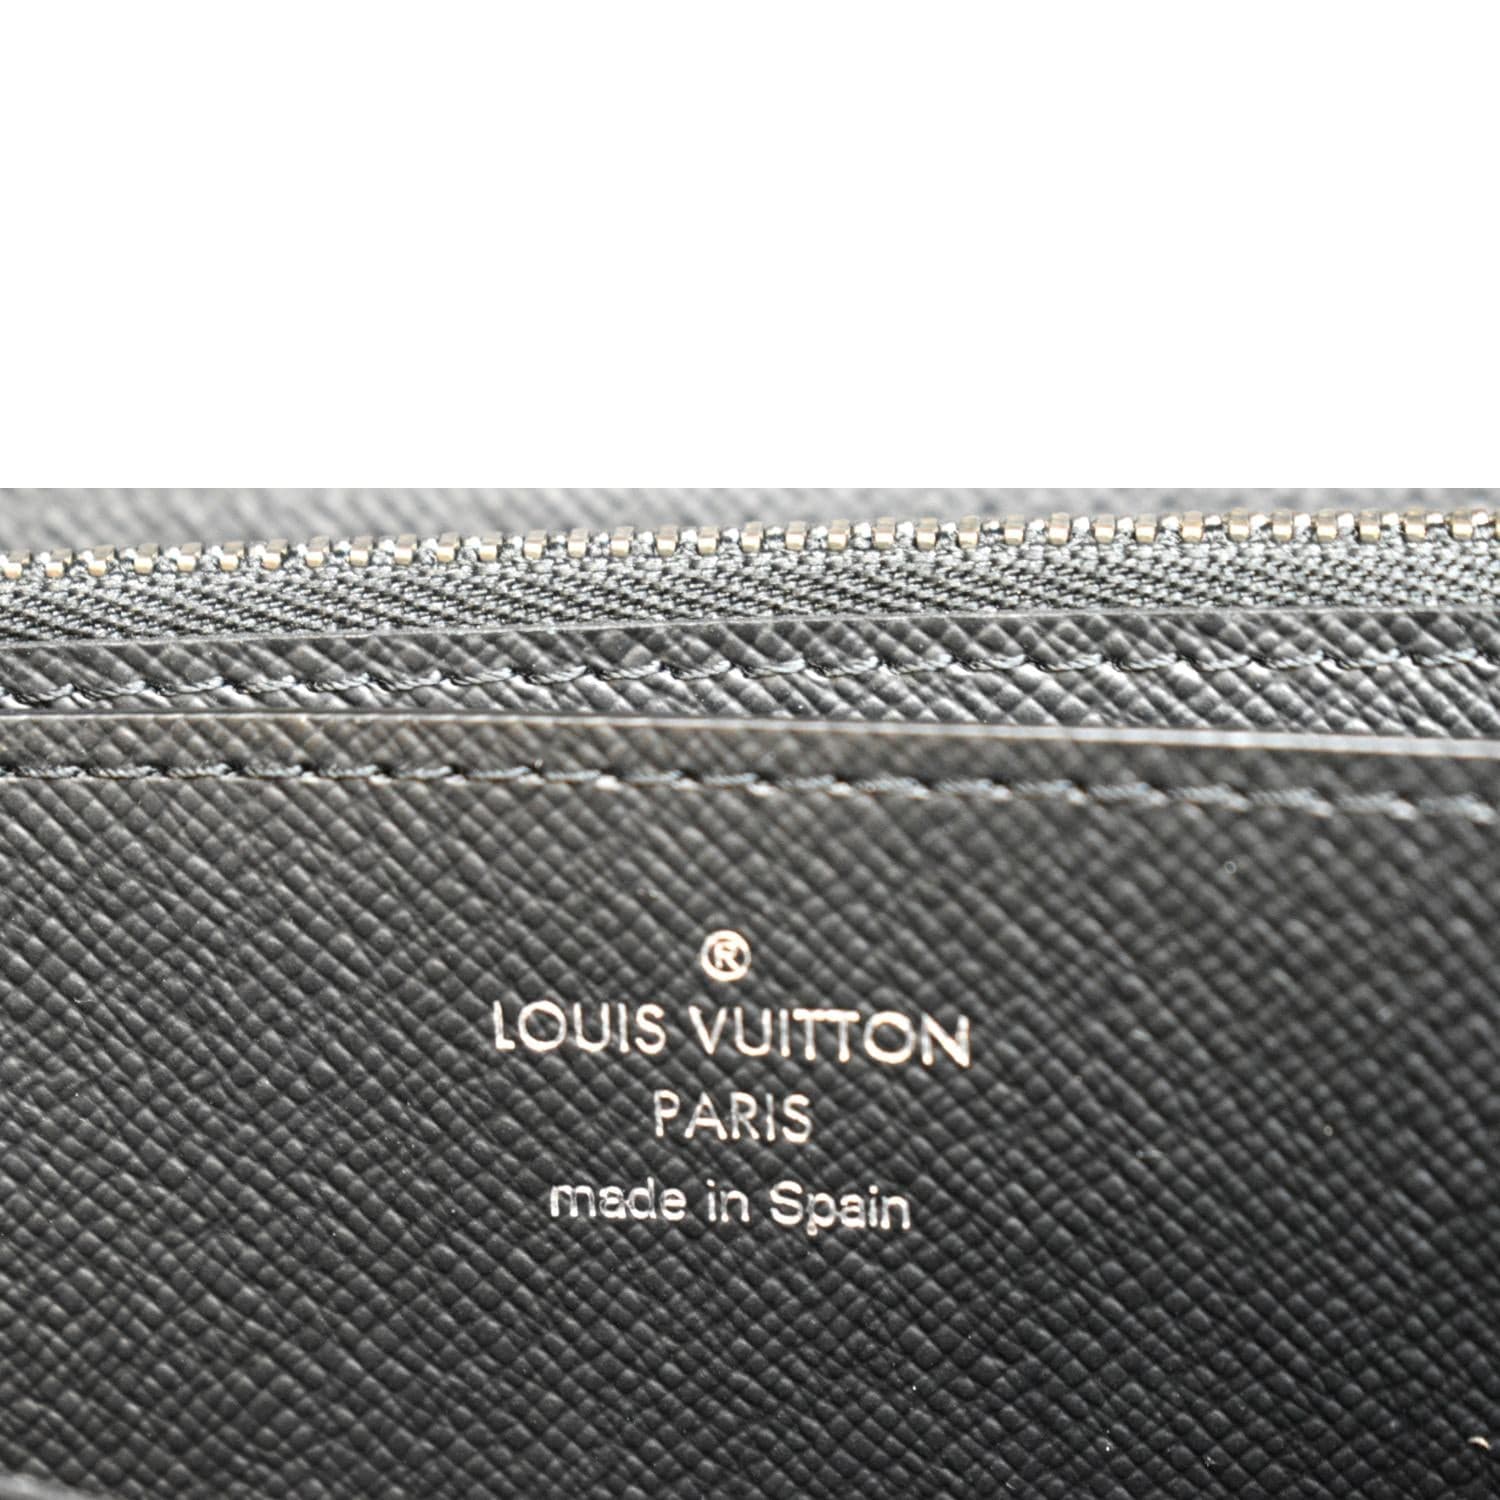 Black Louis Vuitton Monogram Eclipse Zippy Wallet